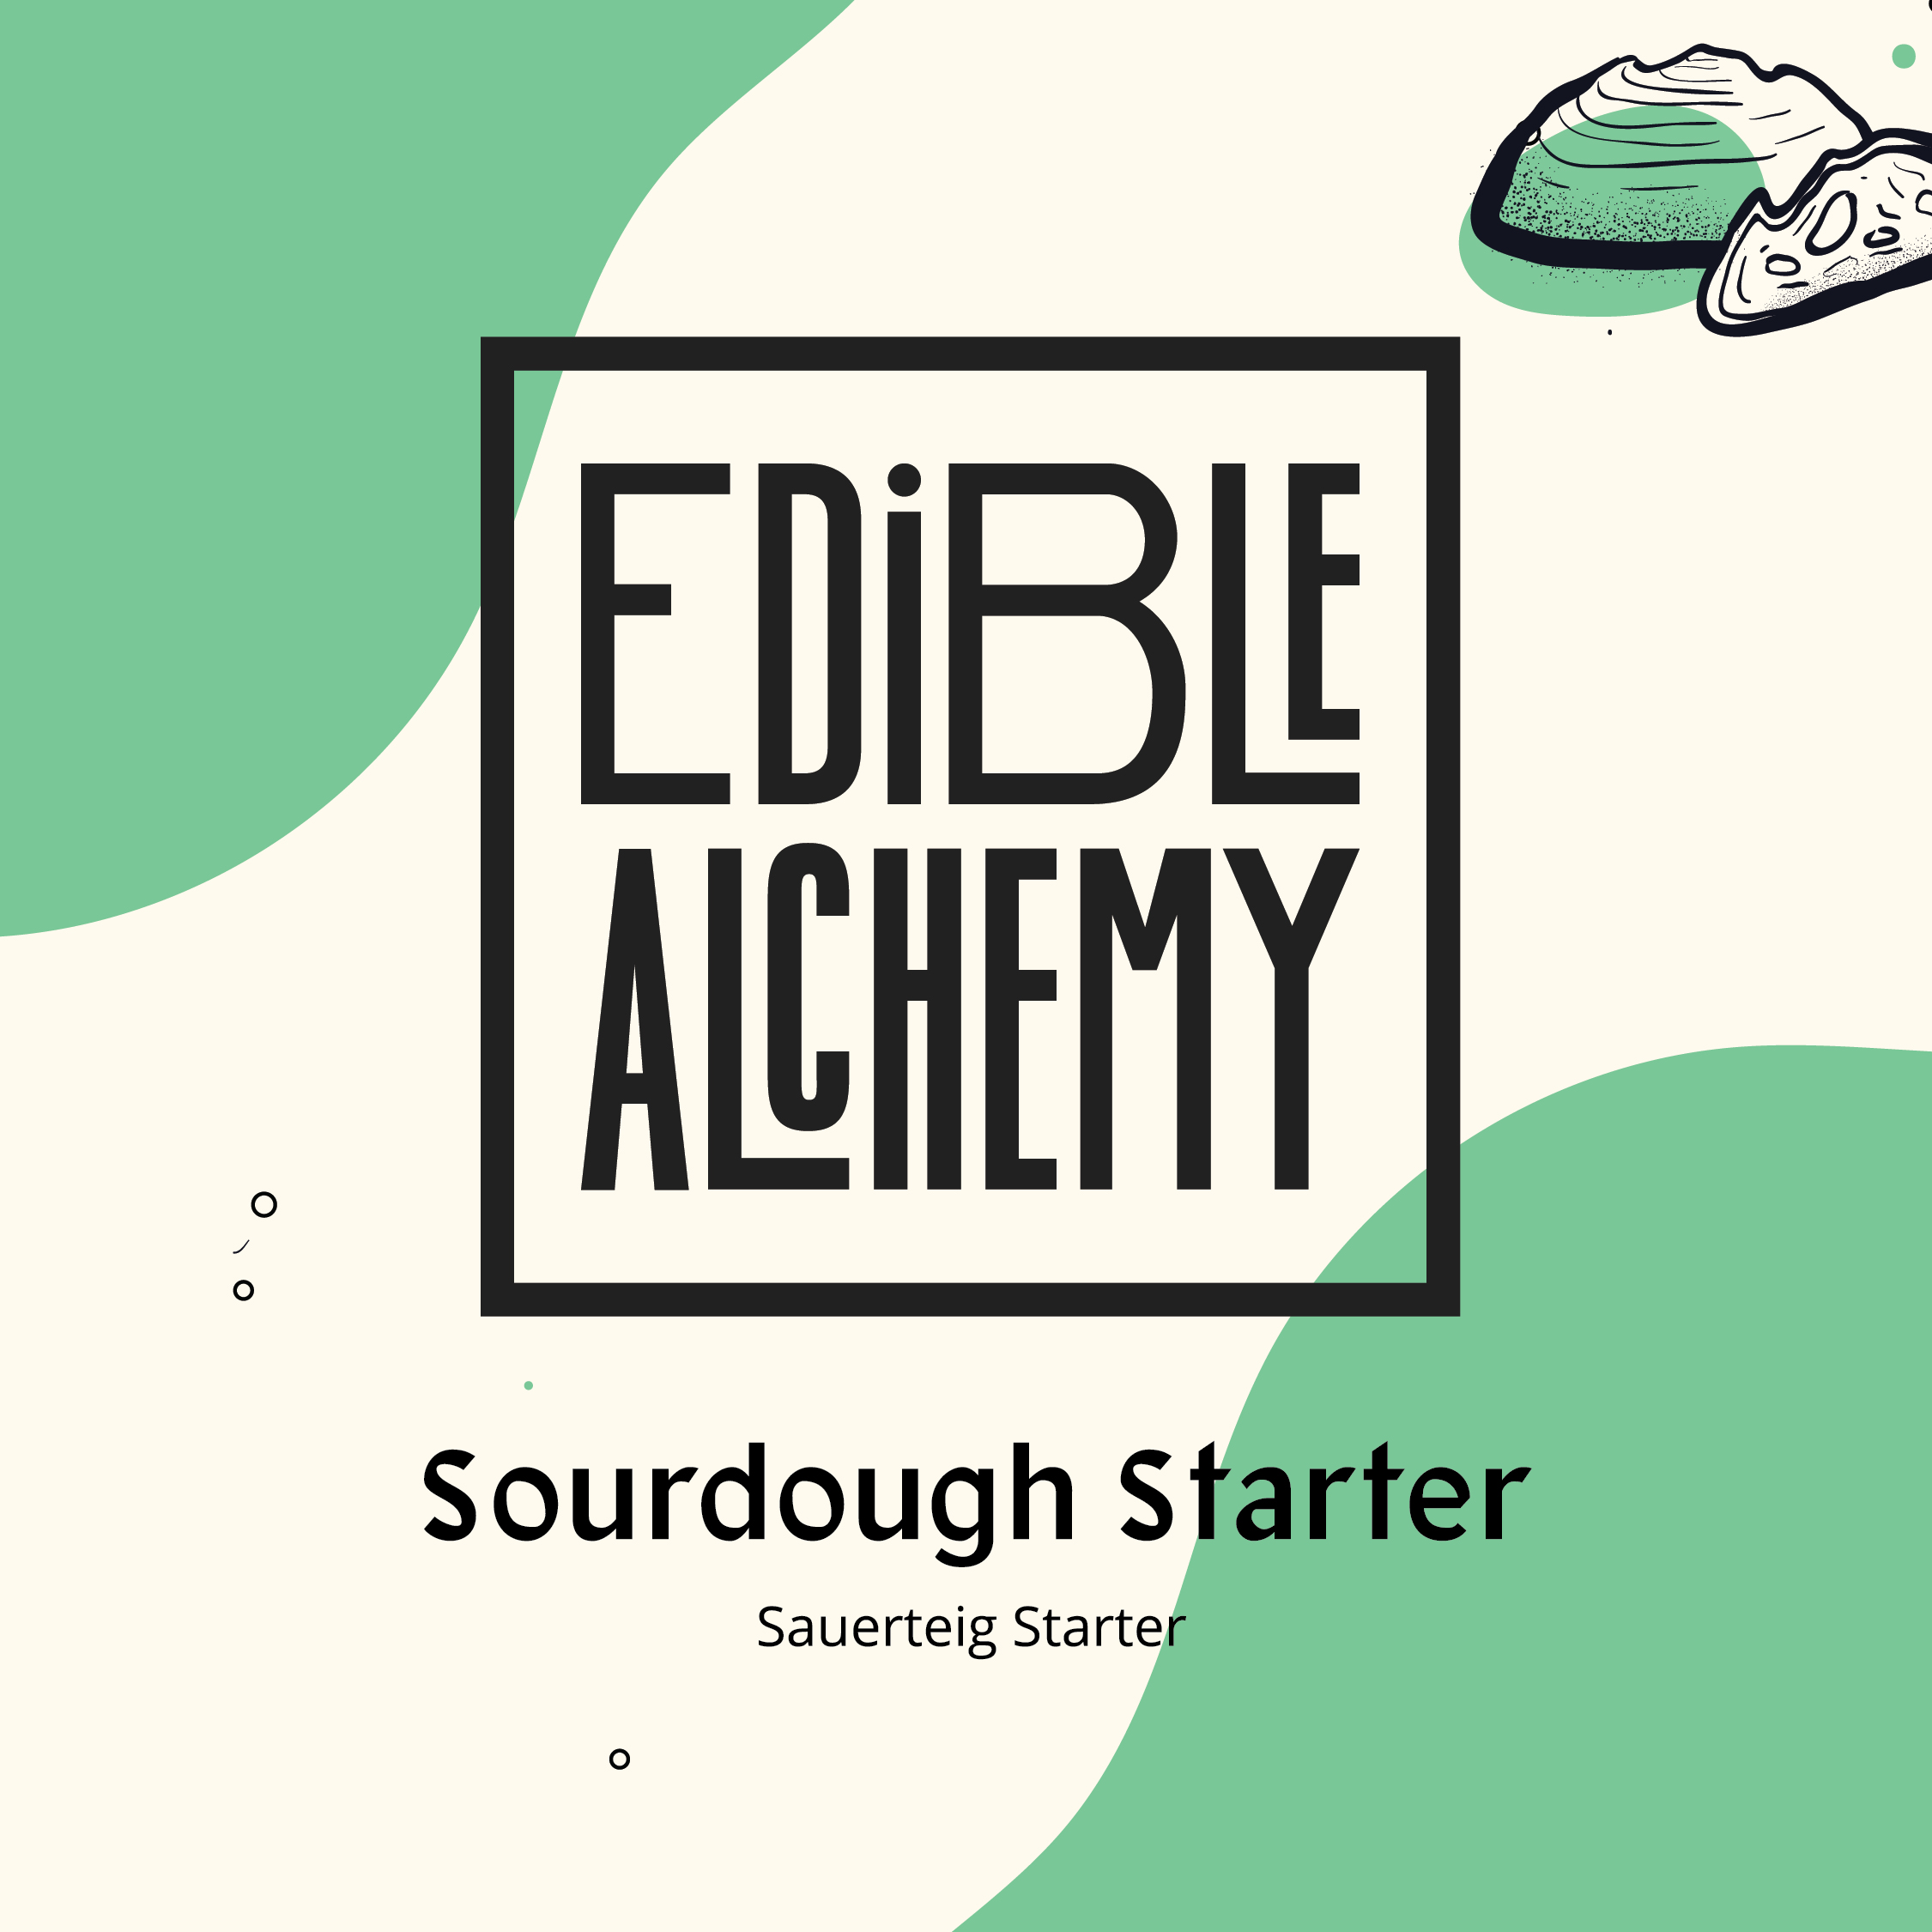 Sourdough Starter (155 year old!) - EDIBLE ALCHEMY